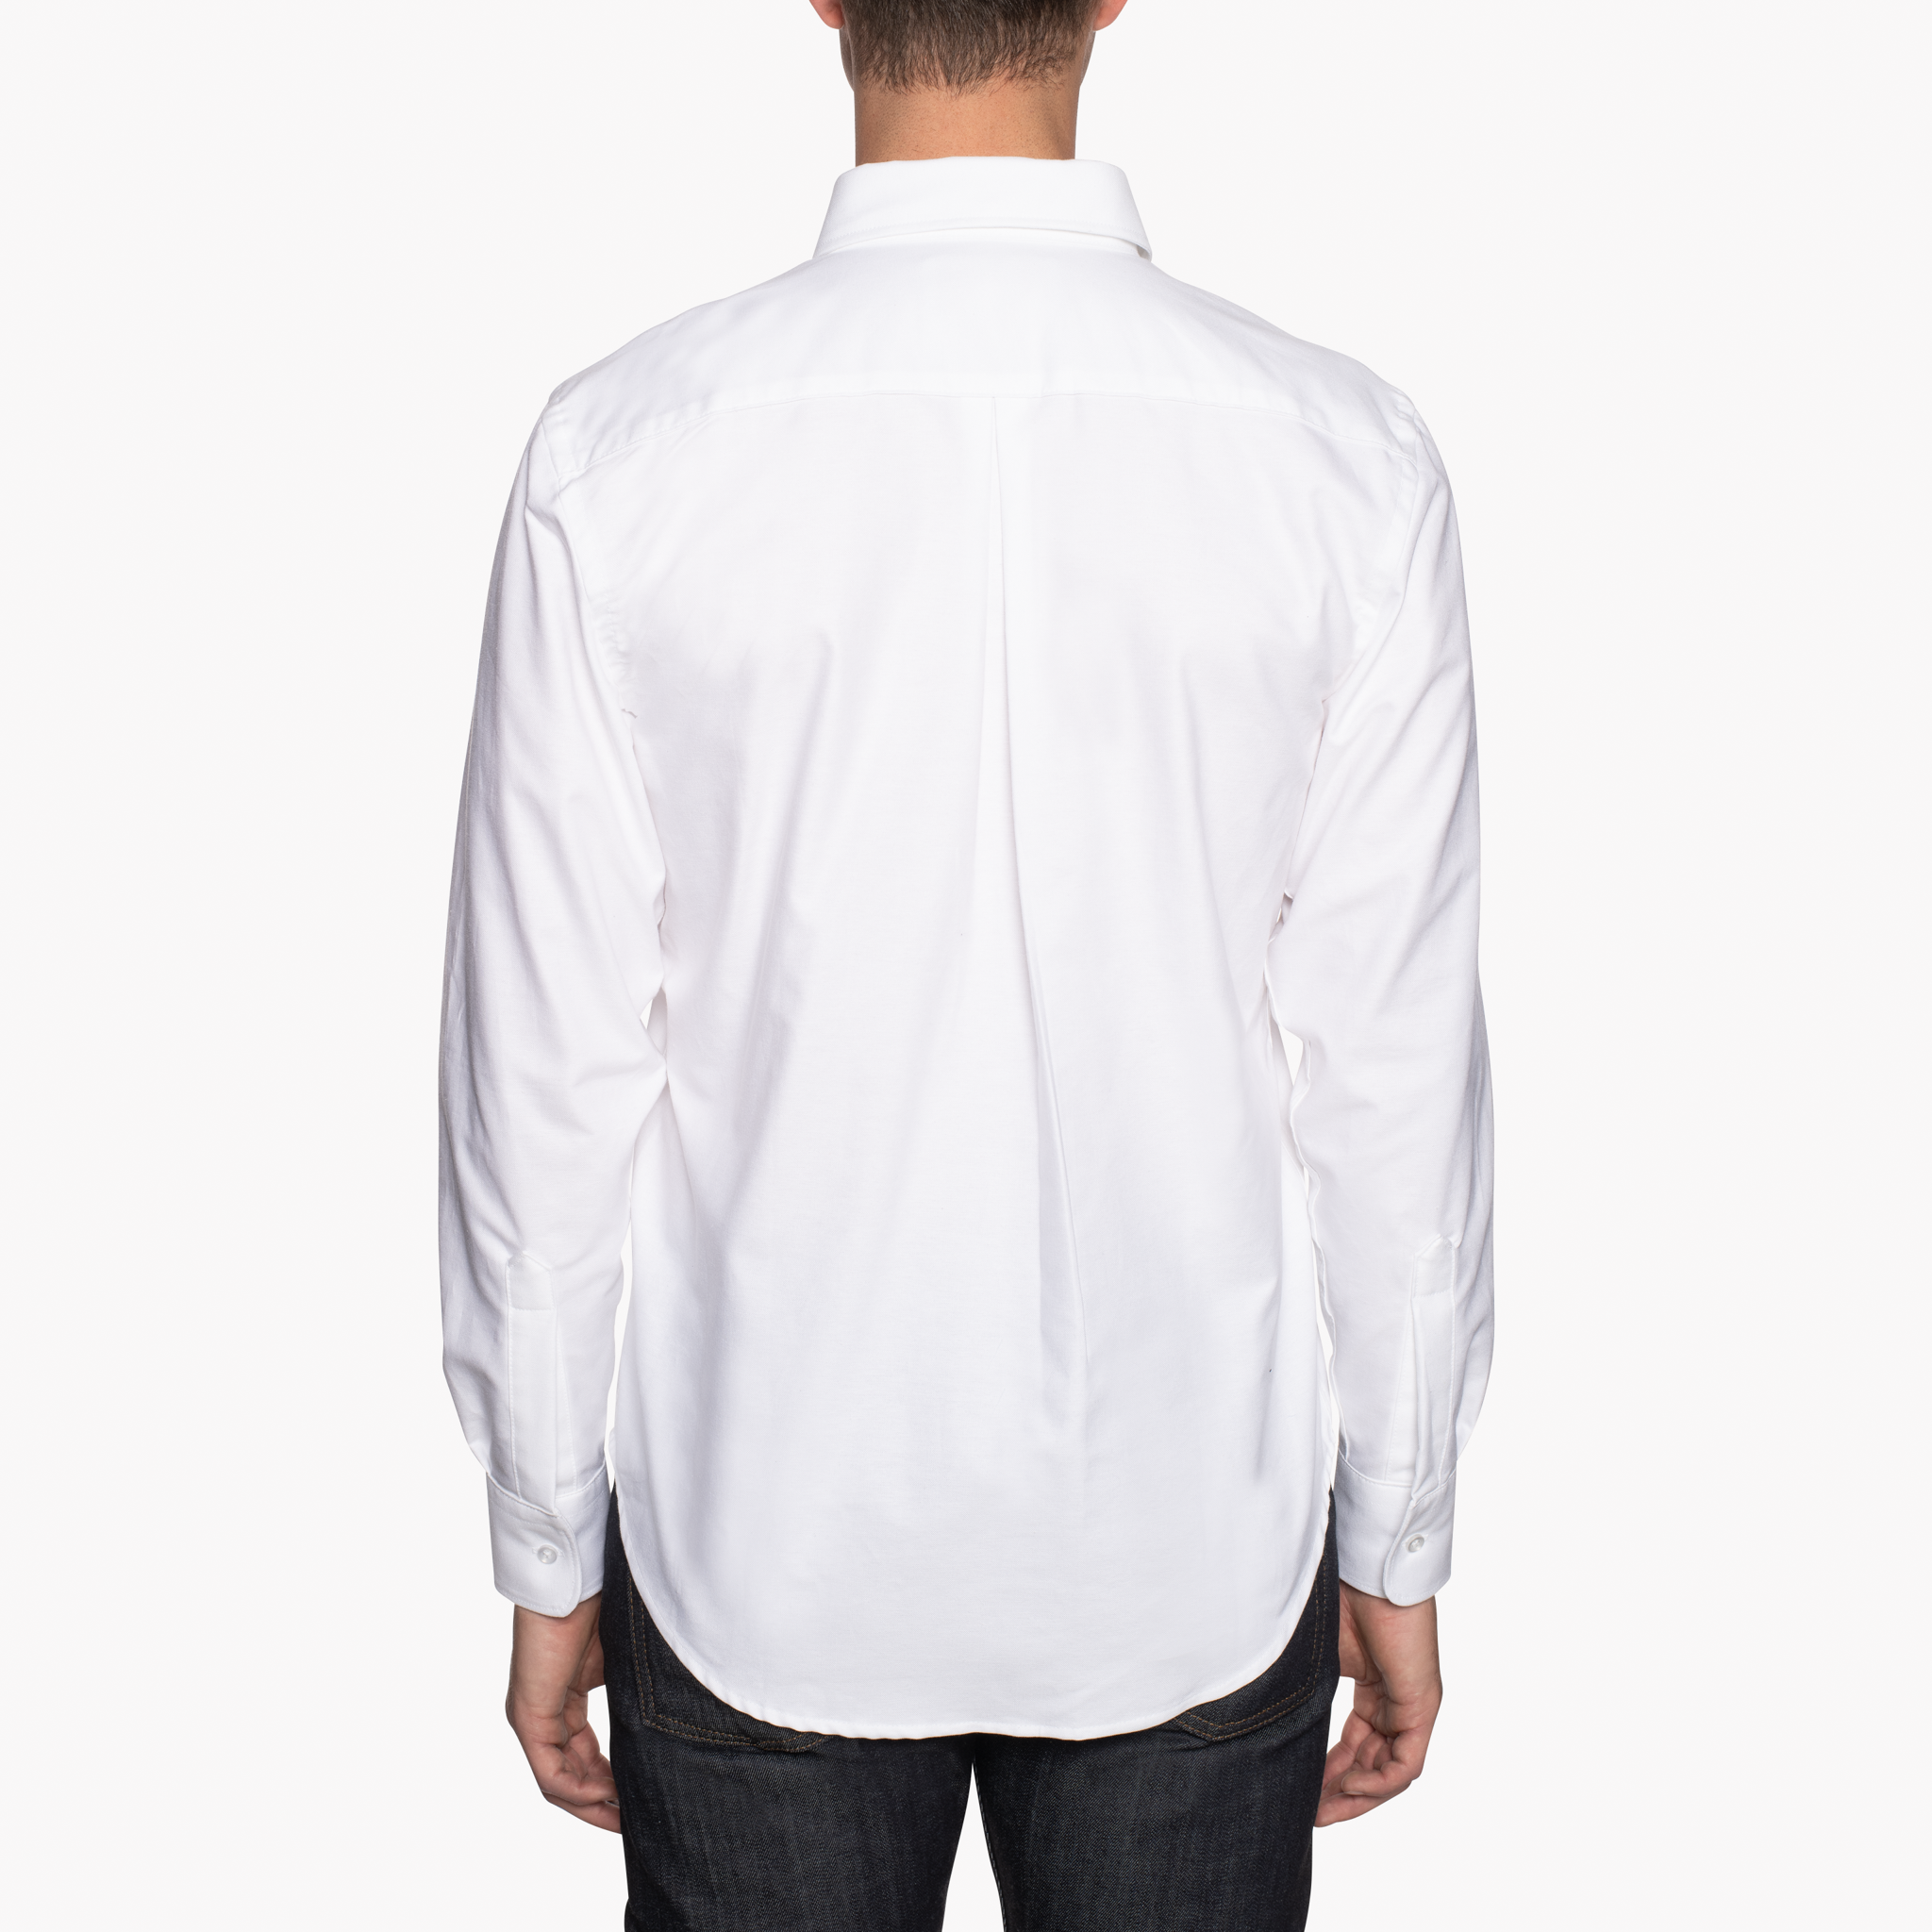  Easy Shirt - Cotton Oxford - white - back 